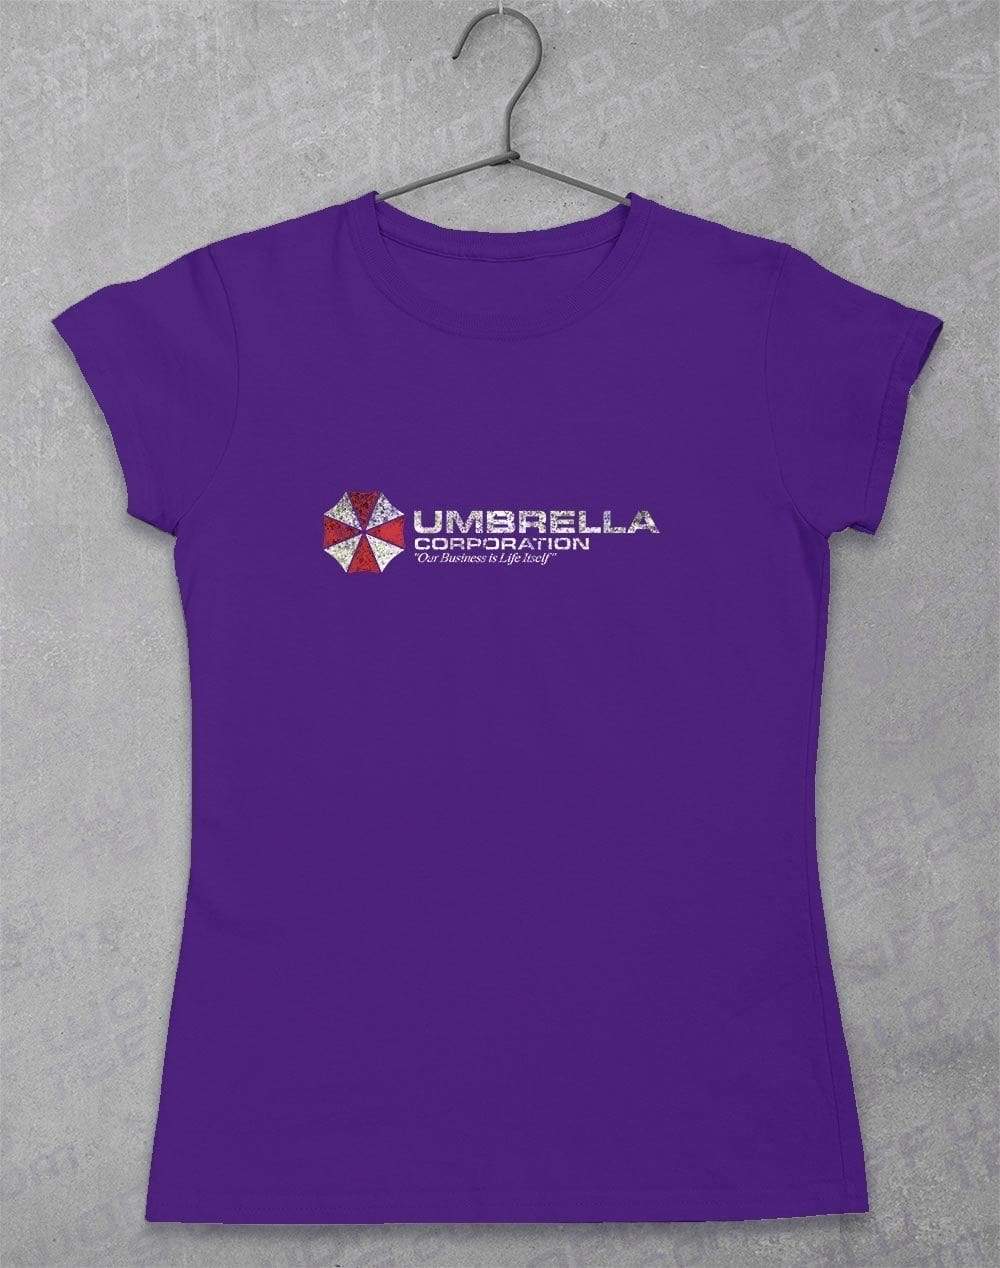 Umbrella Corporation - Women's T-Shirt 8-10 / Lilac  - Off World Tees